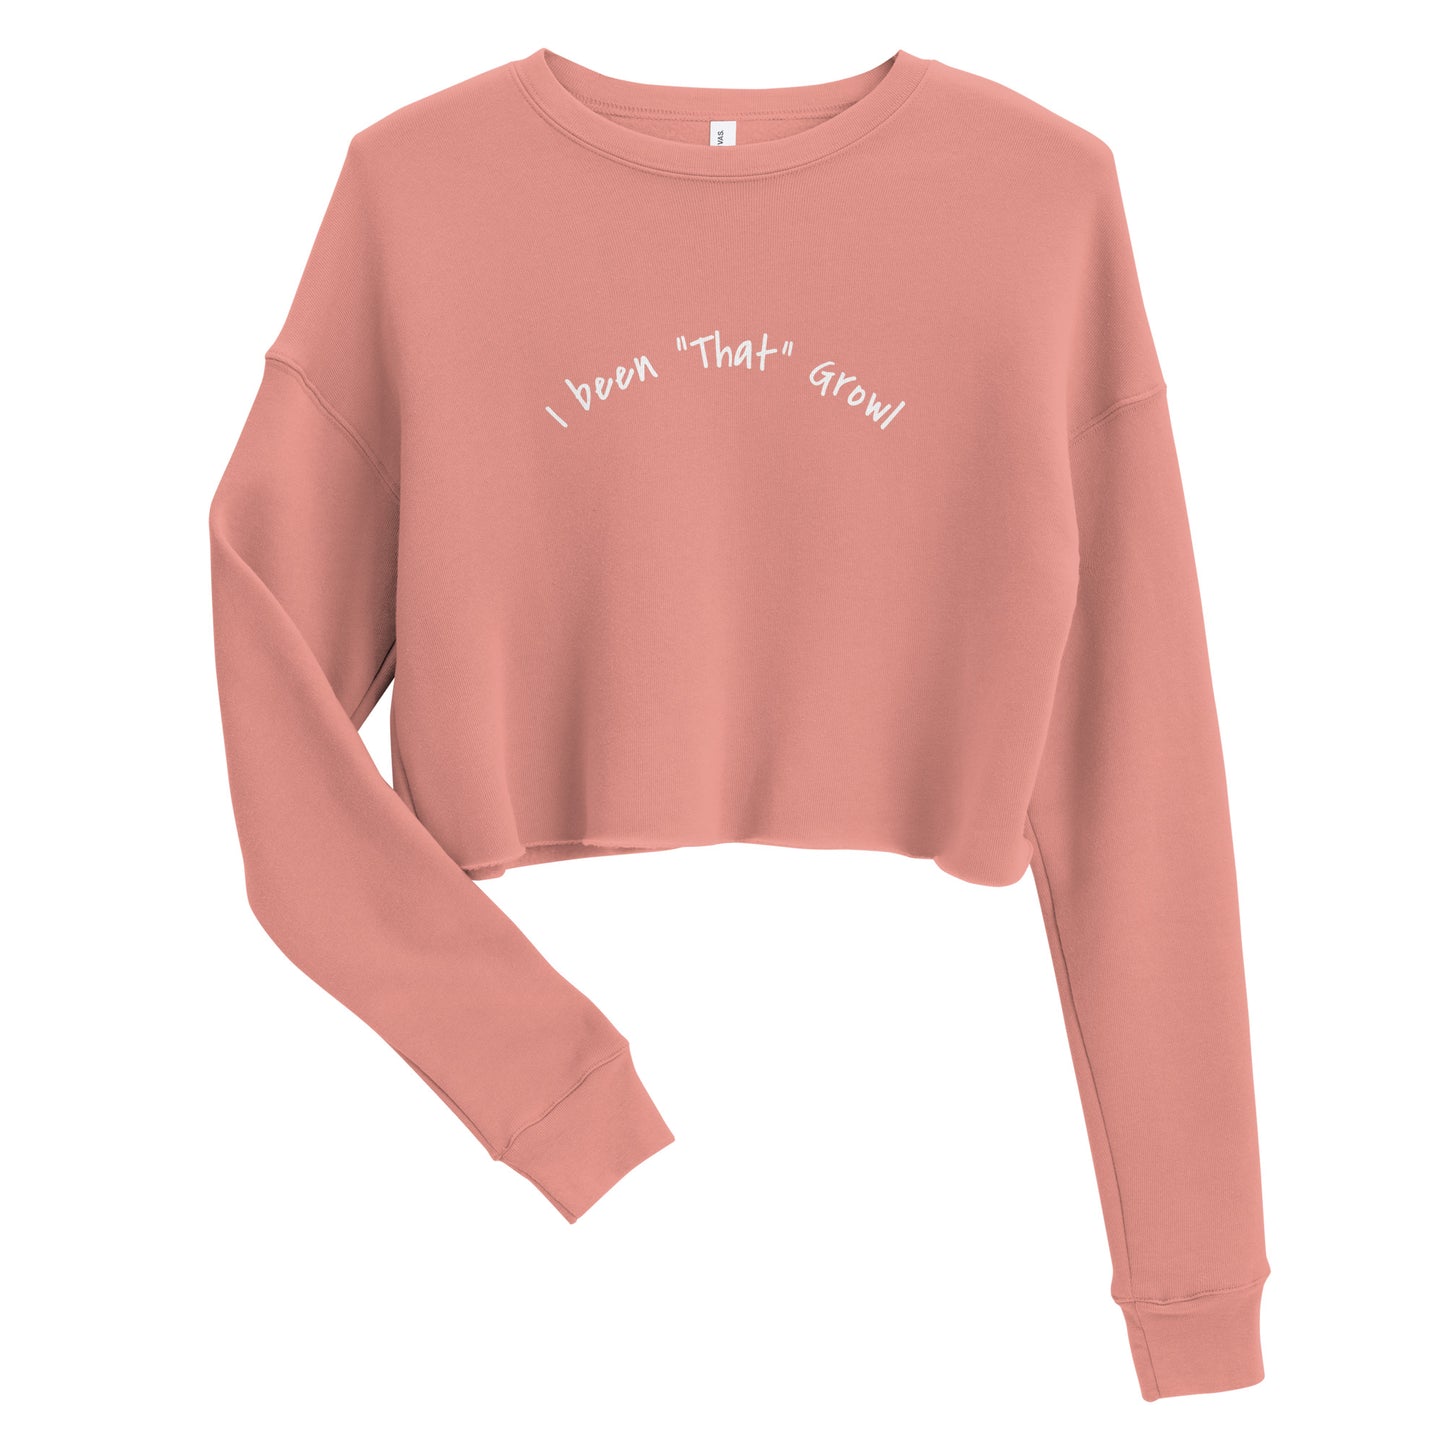 A'Savoir Crop Sweatshirt - "I been"